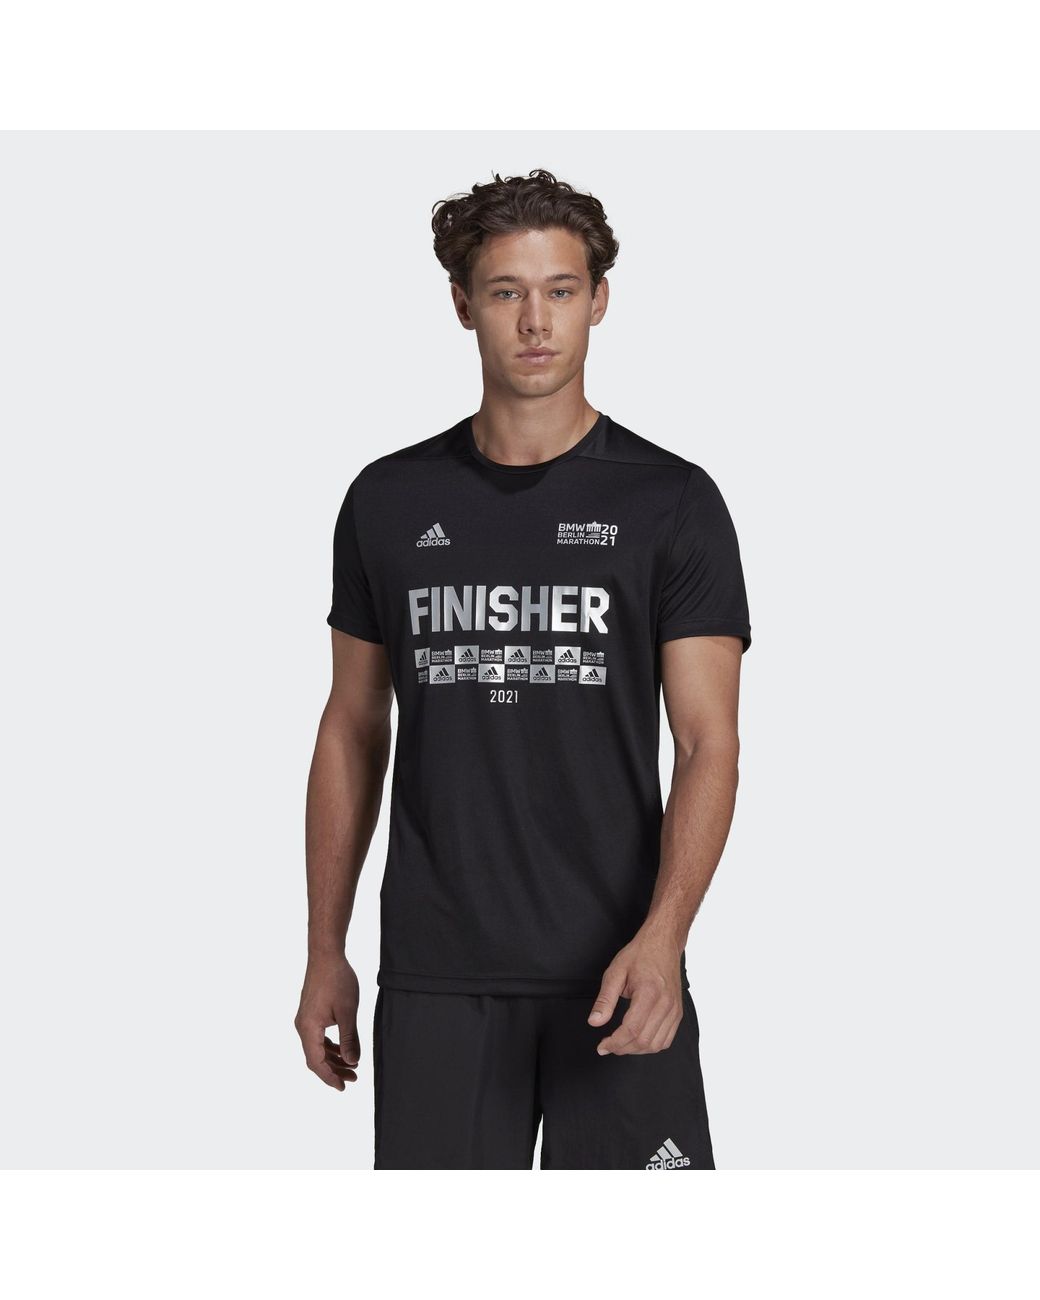 adidas Berlin Marathon Finisher T-shirt in Black for Men | Lyst UK